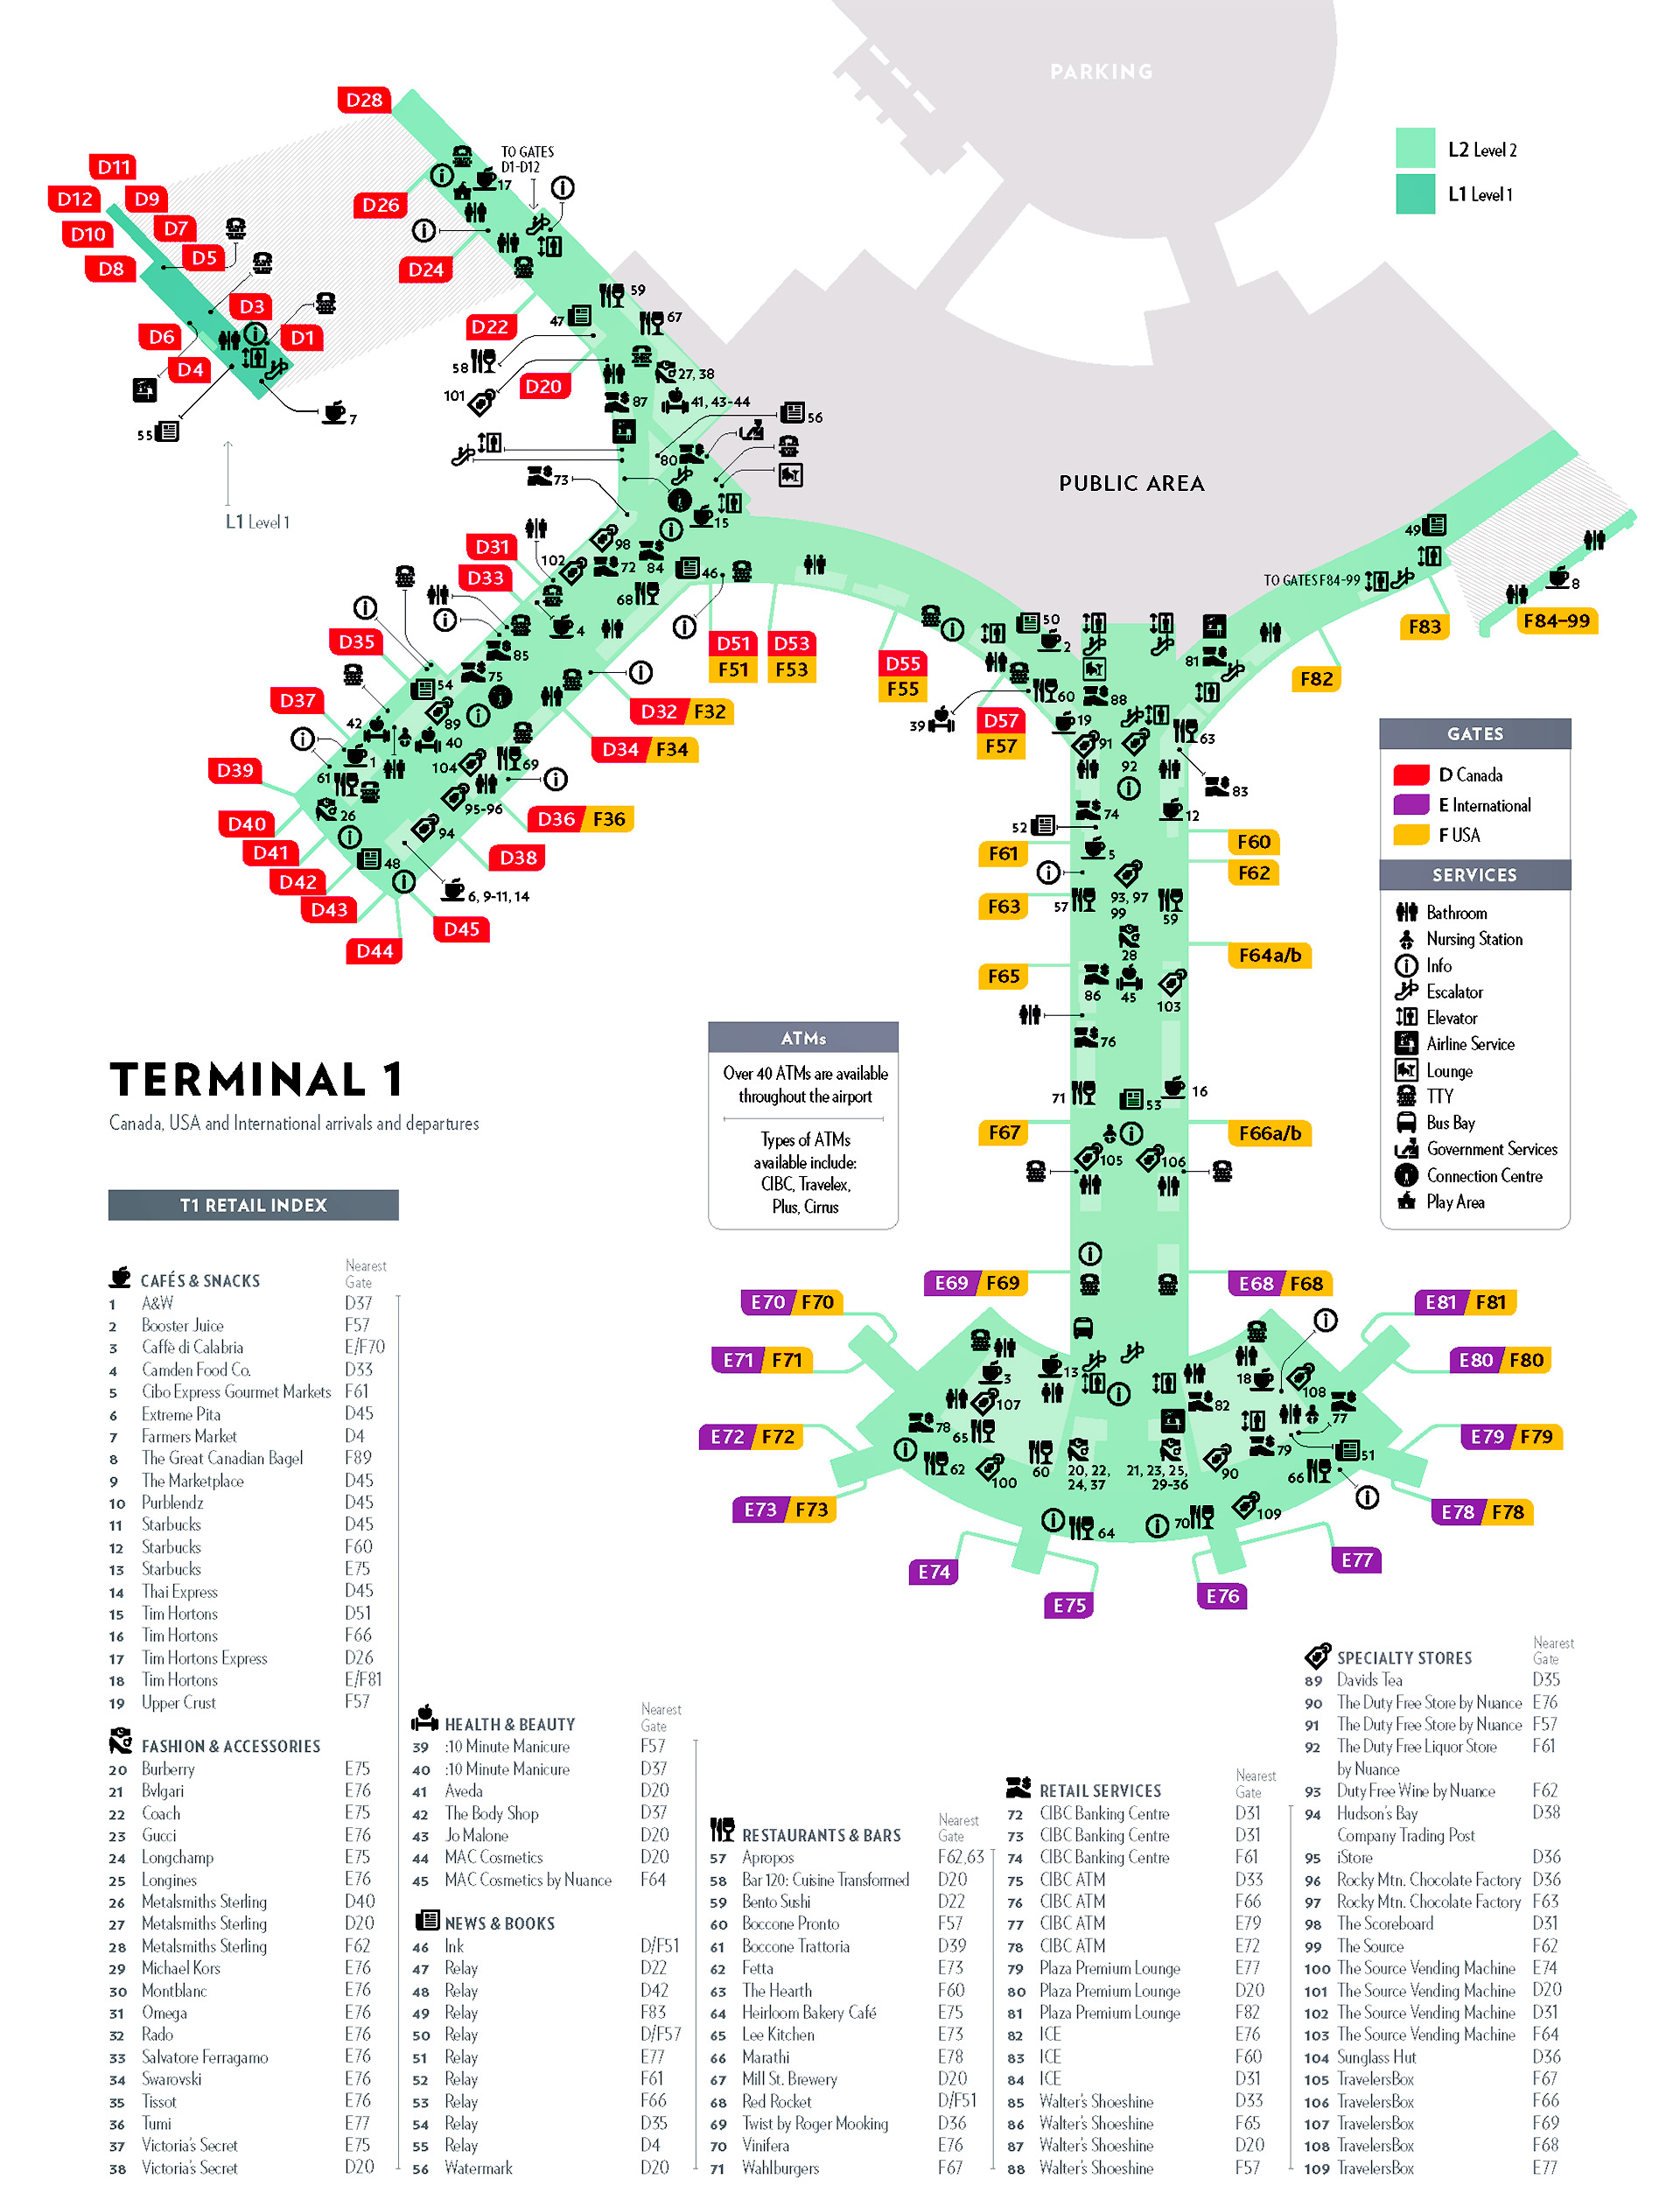 Terminal 1 Toronto Pearson Airport YYZ map